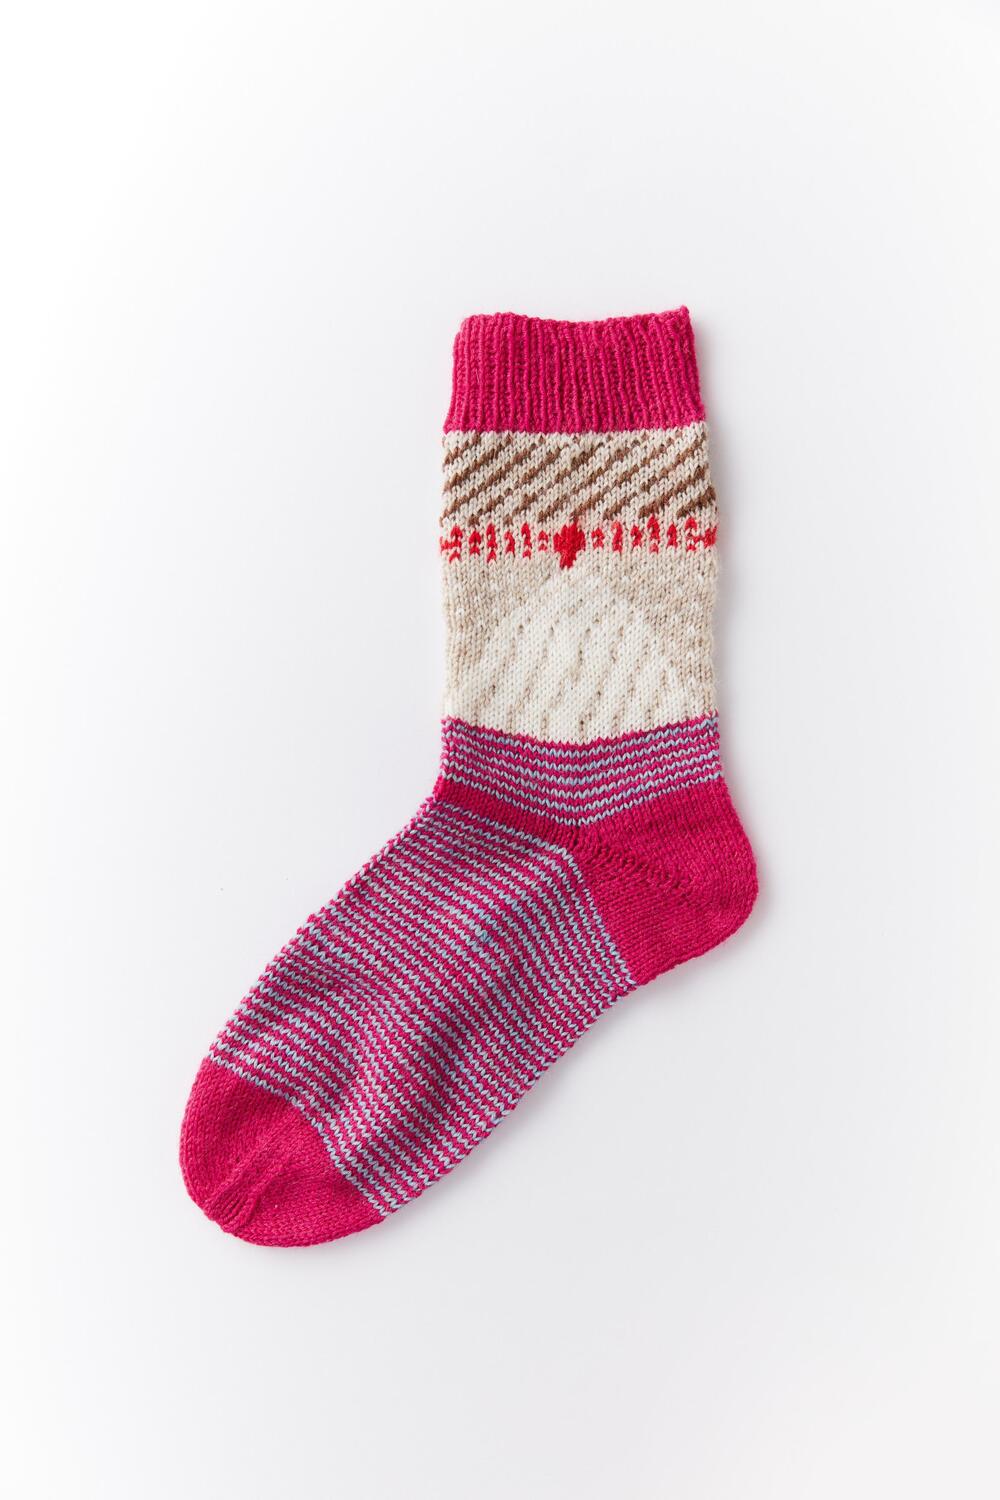 Bild: 9783735870926 | Mismatched Socks | Mustersocken stricken, kombinieren, verschenken